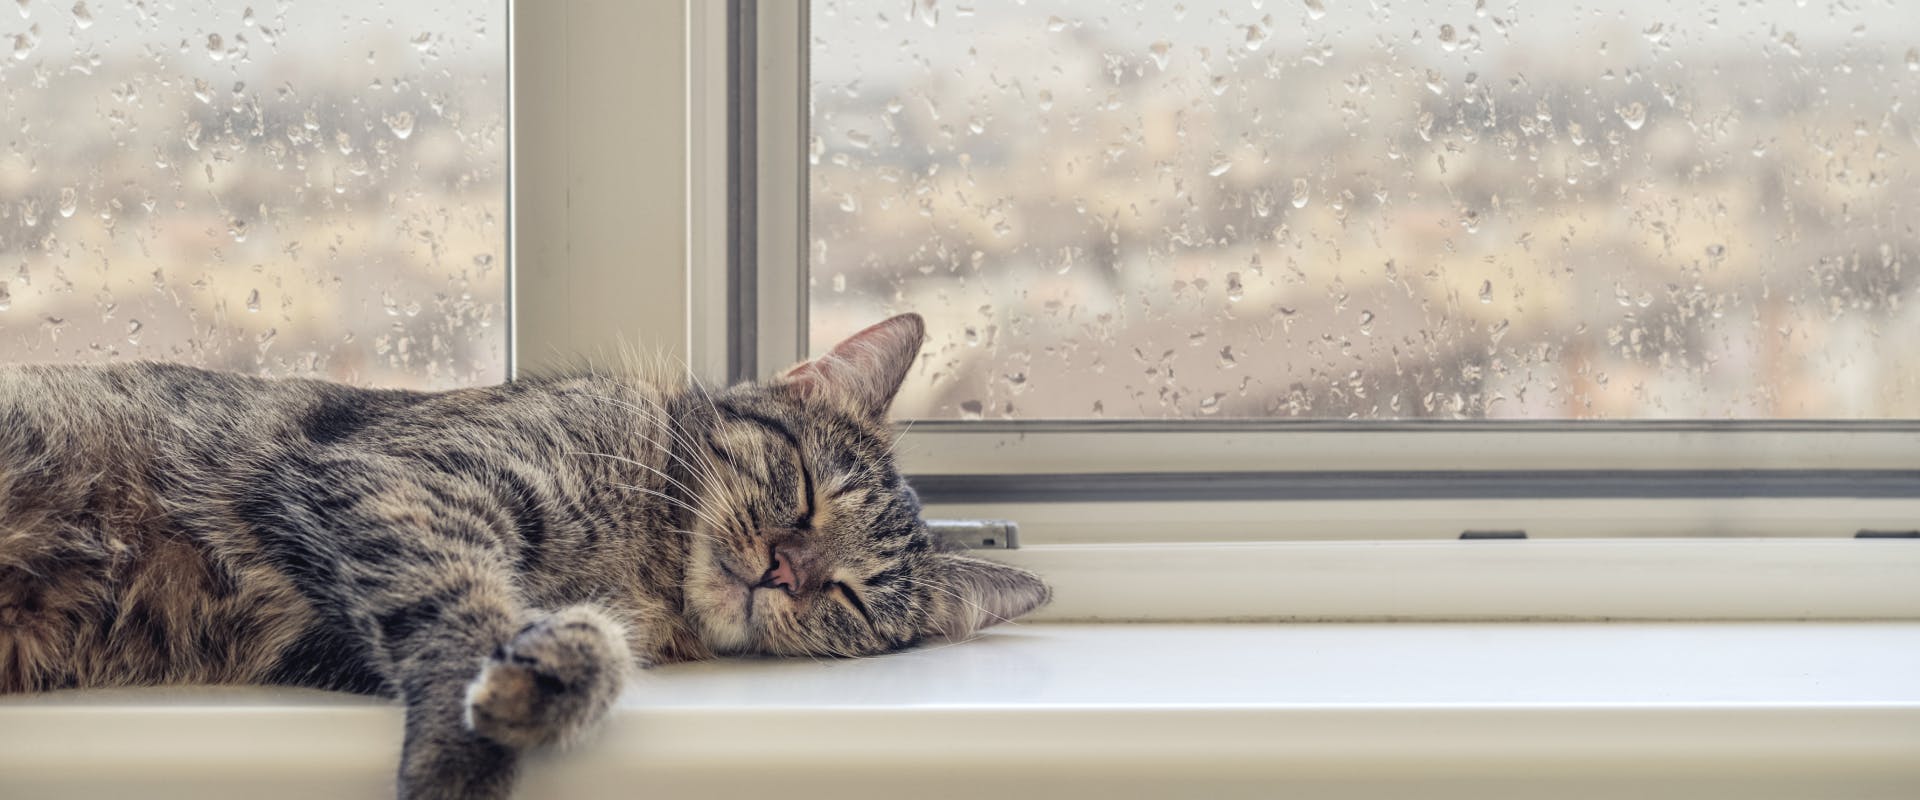 A cat sleeps on a windowsill.